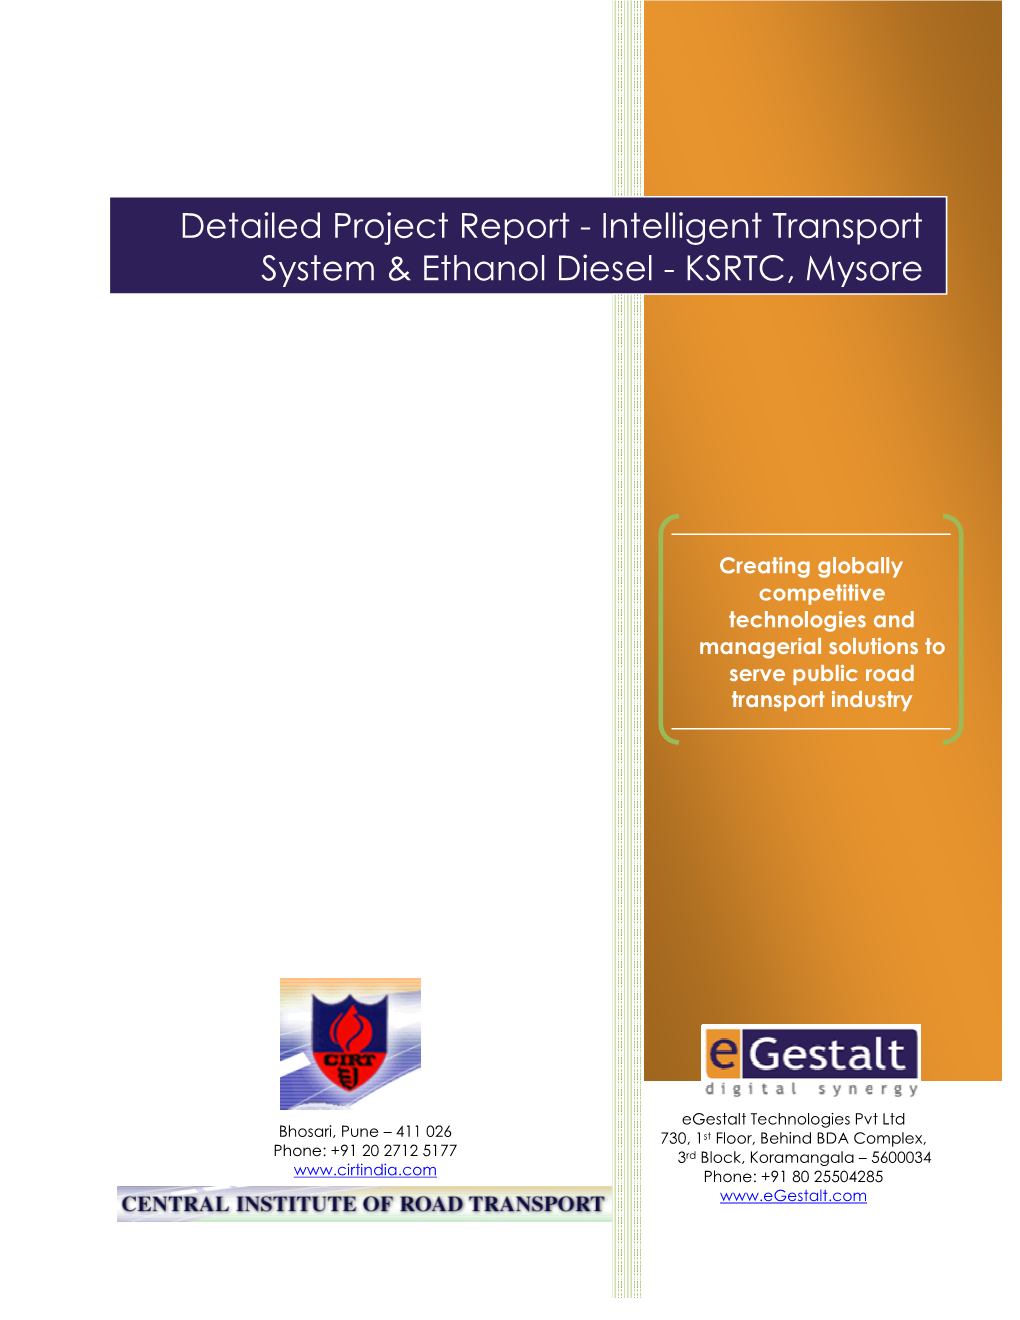 Detailed Project Report - Intelligent Transport System & Ethanol Diesel - KSRTC, Mysore